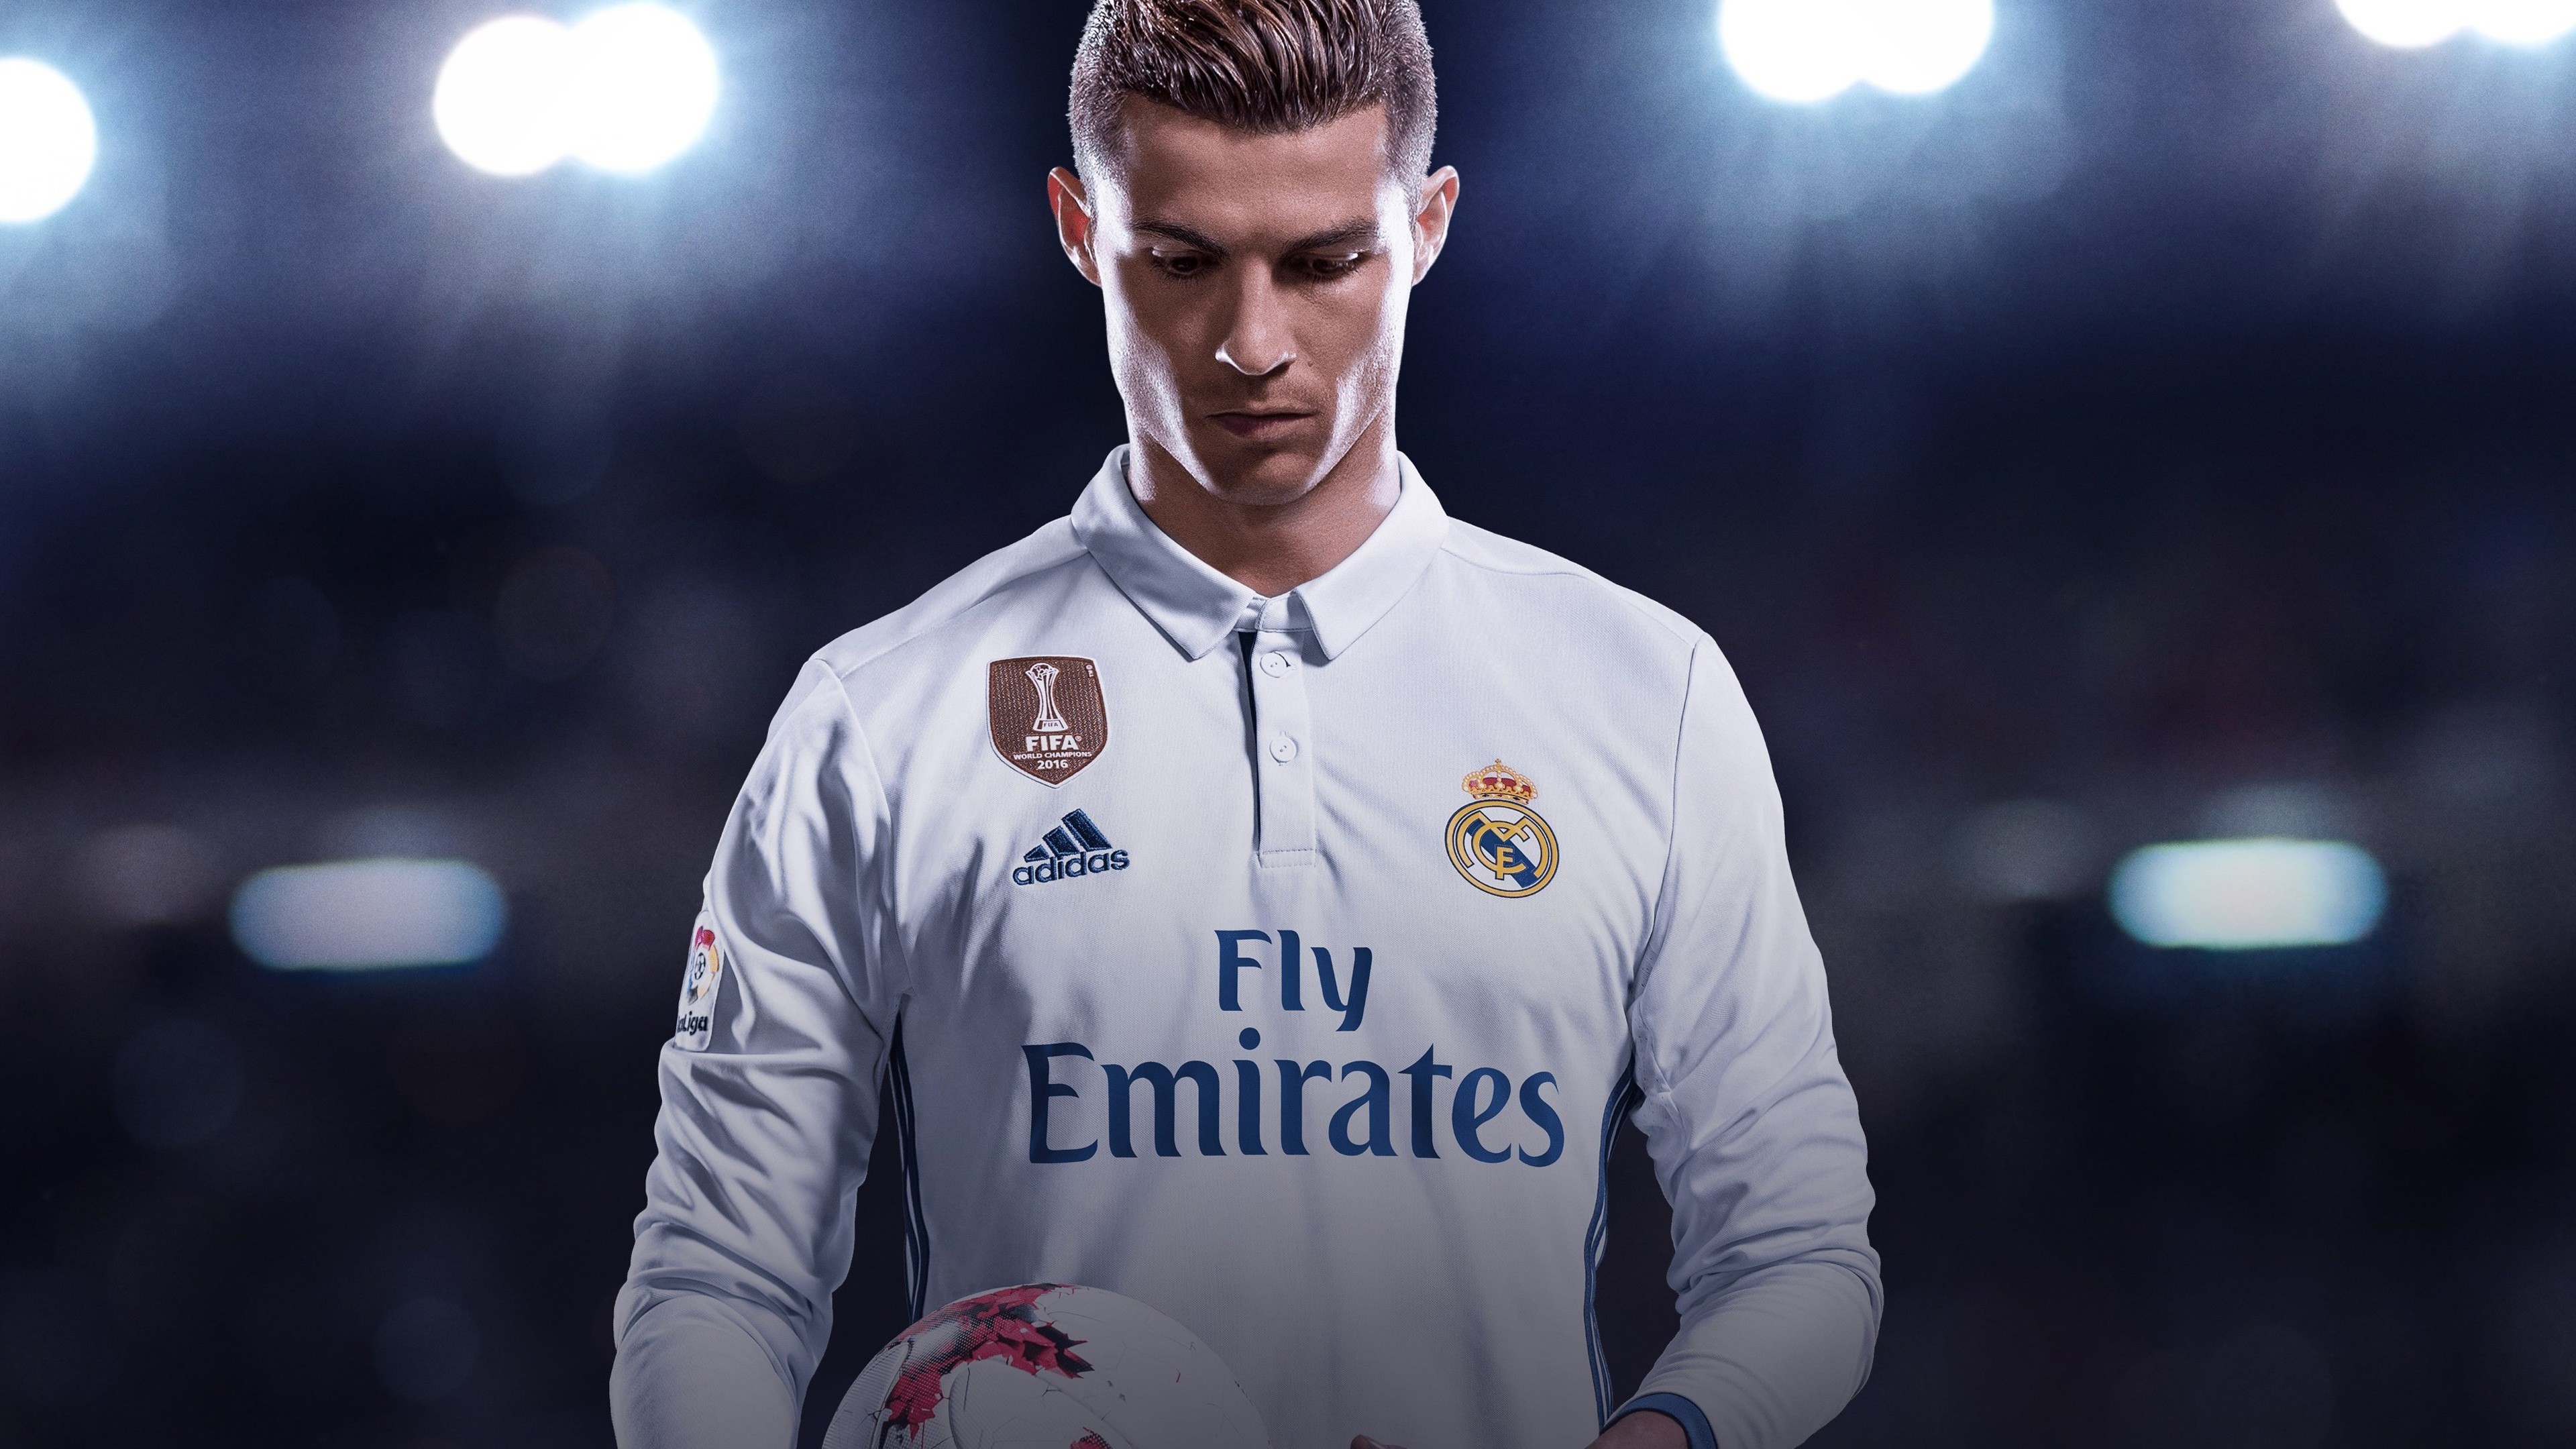 Cristiano Ronaldo Real Madrid Image download